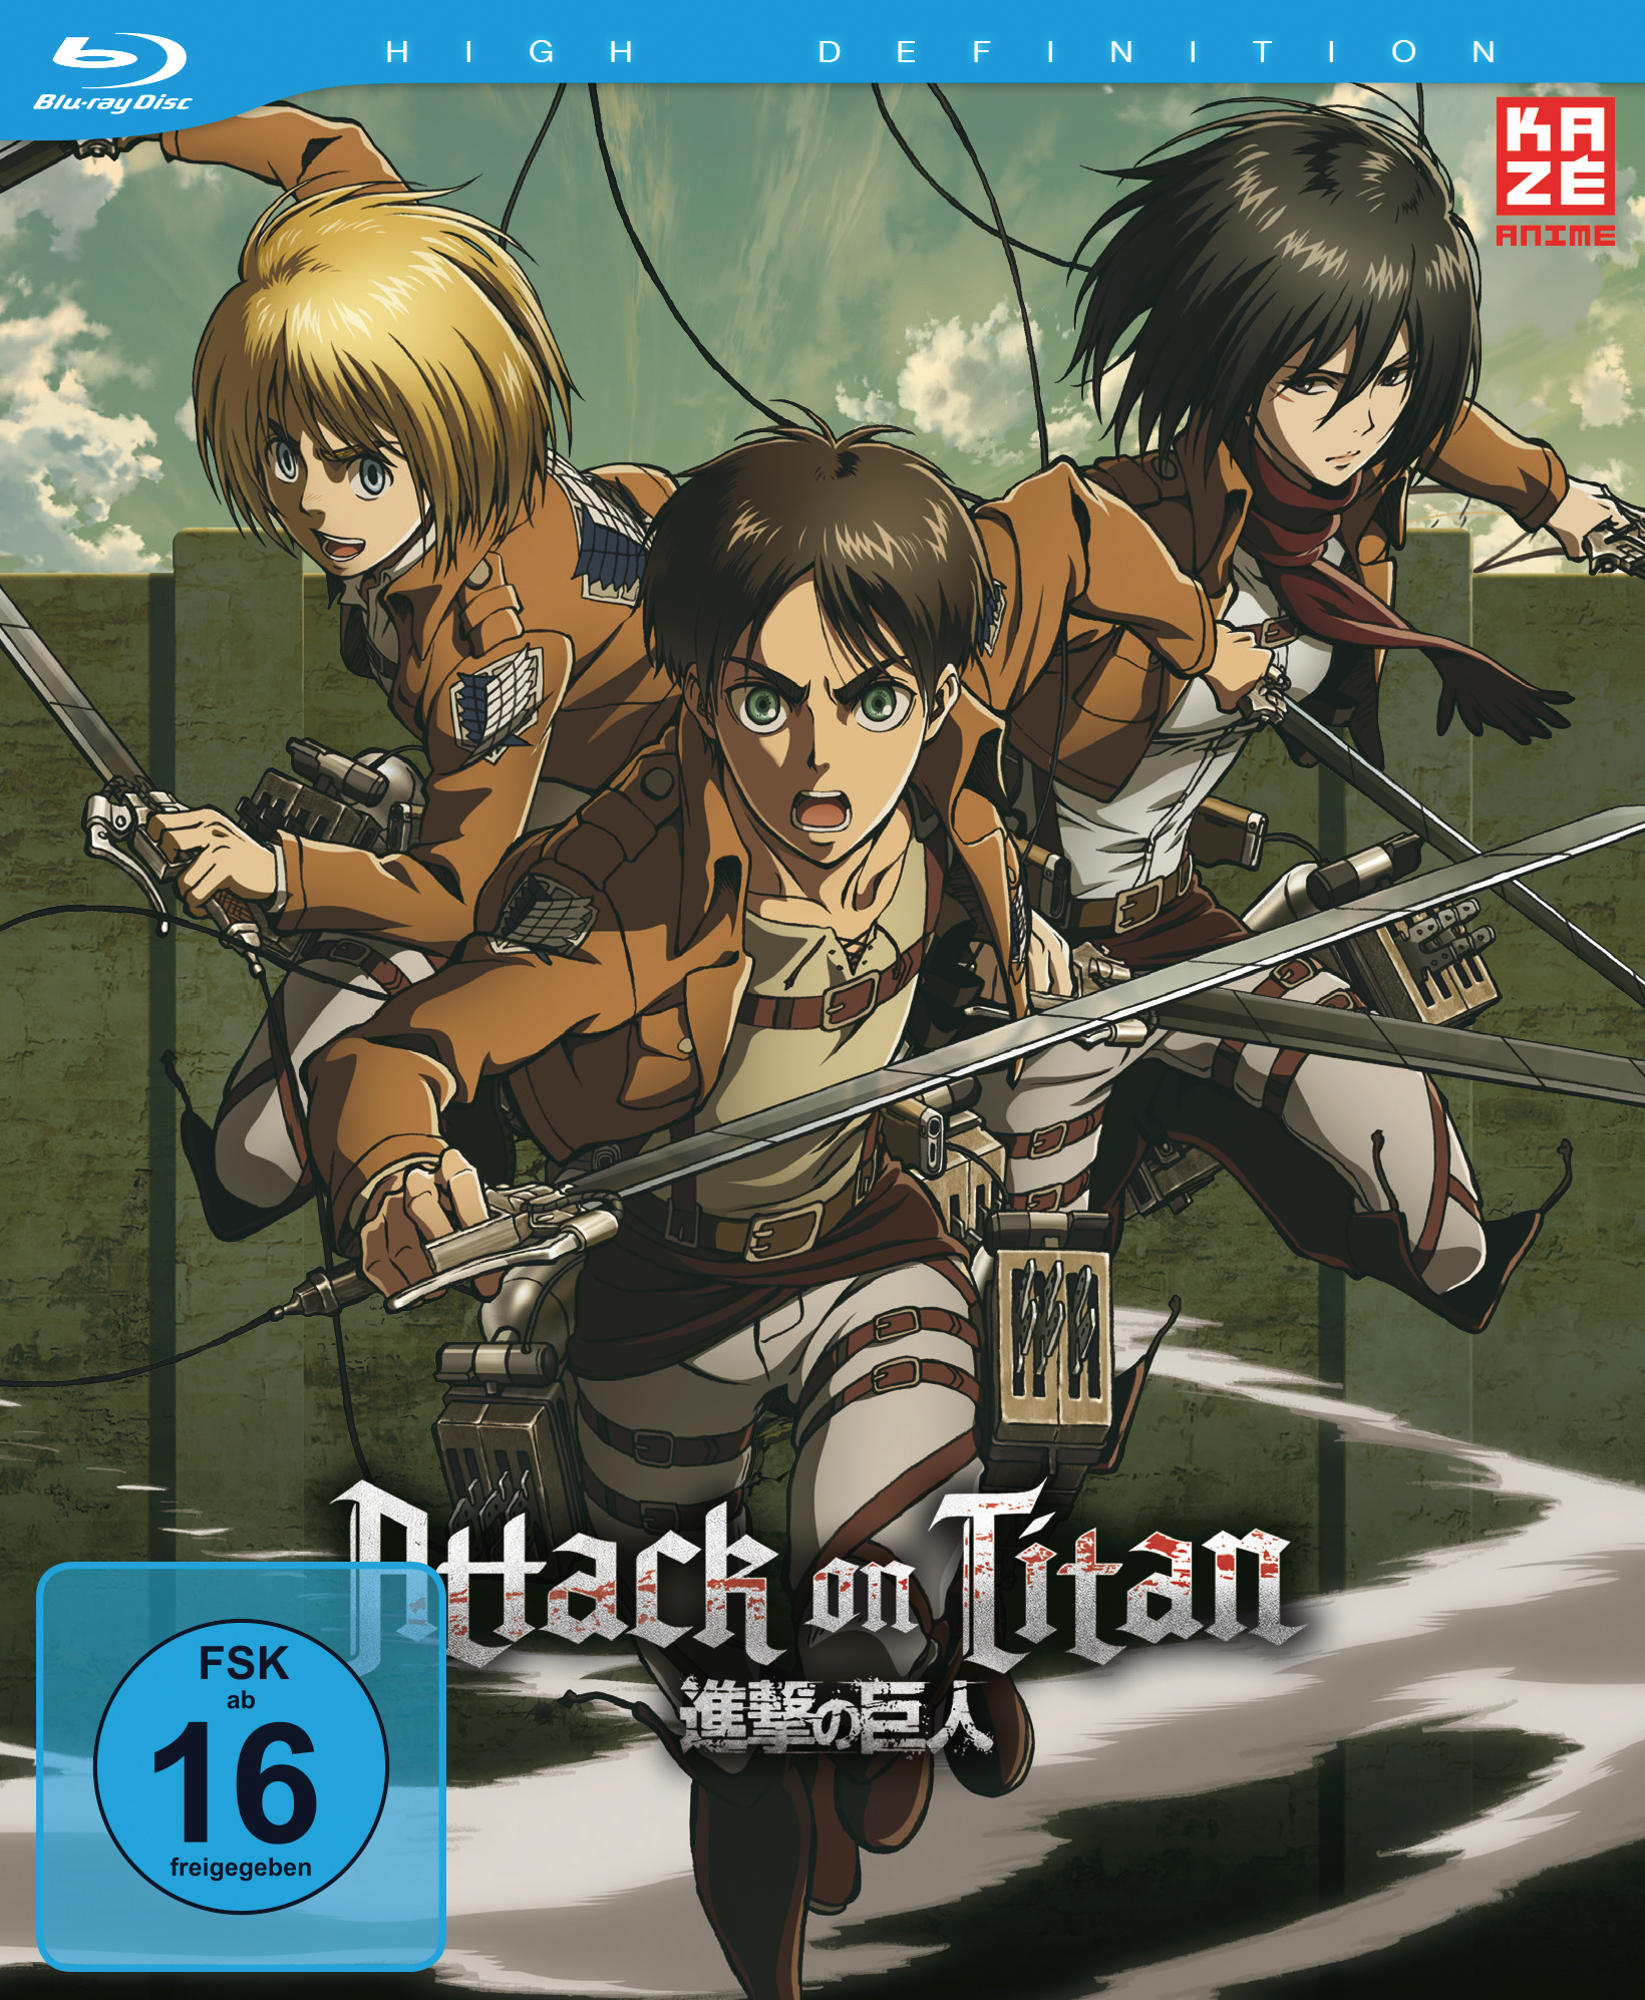 on Blu-ray Vol. Attack 4 Titan